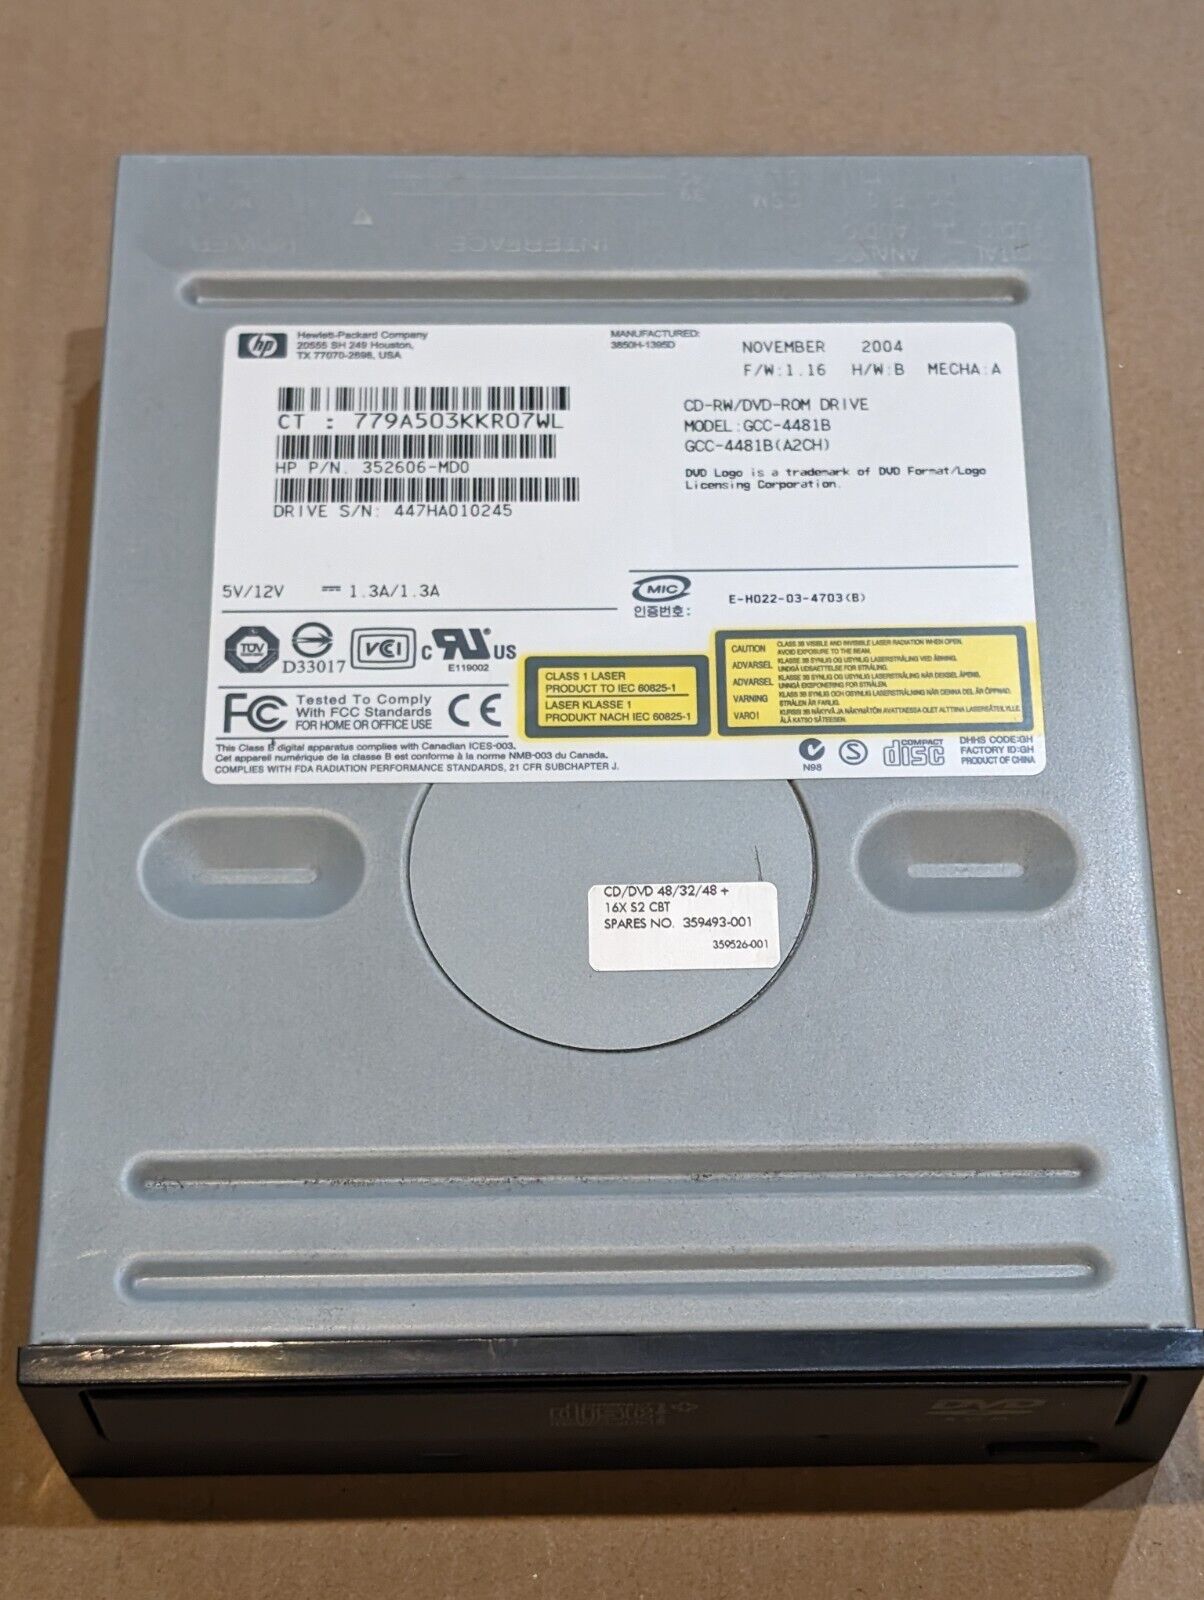 HP GCC-4481B (A2CH) IDE 5.25 in DVD-ROM Internal Desktop Drive